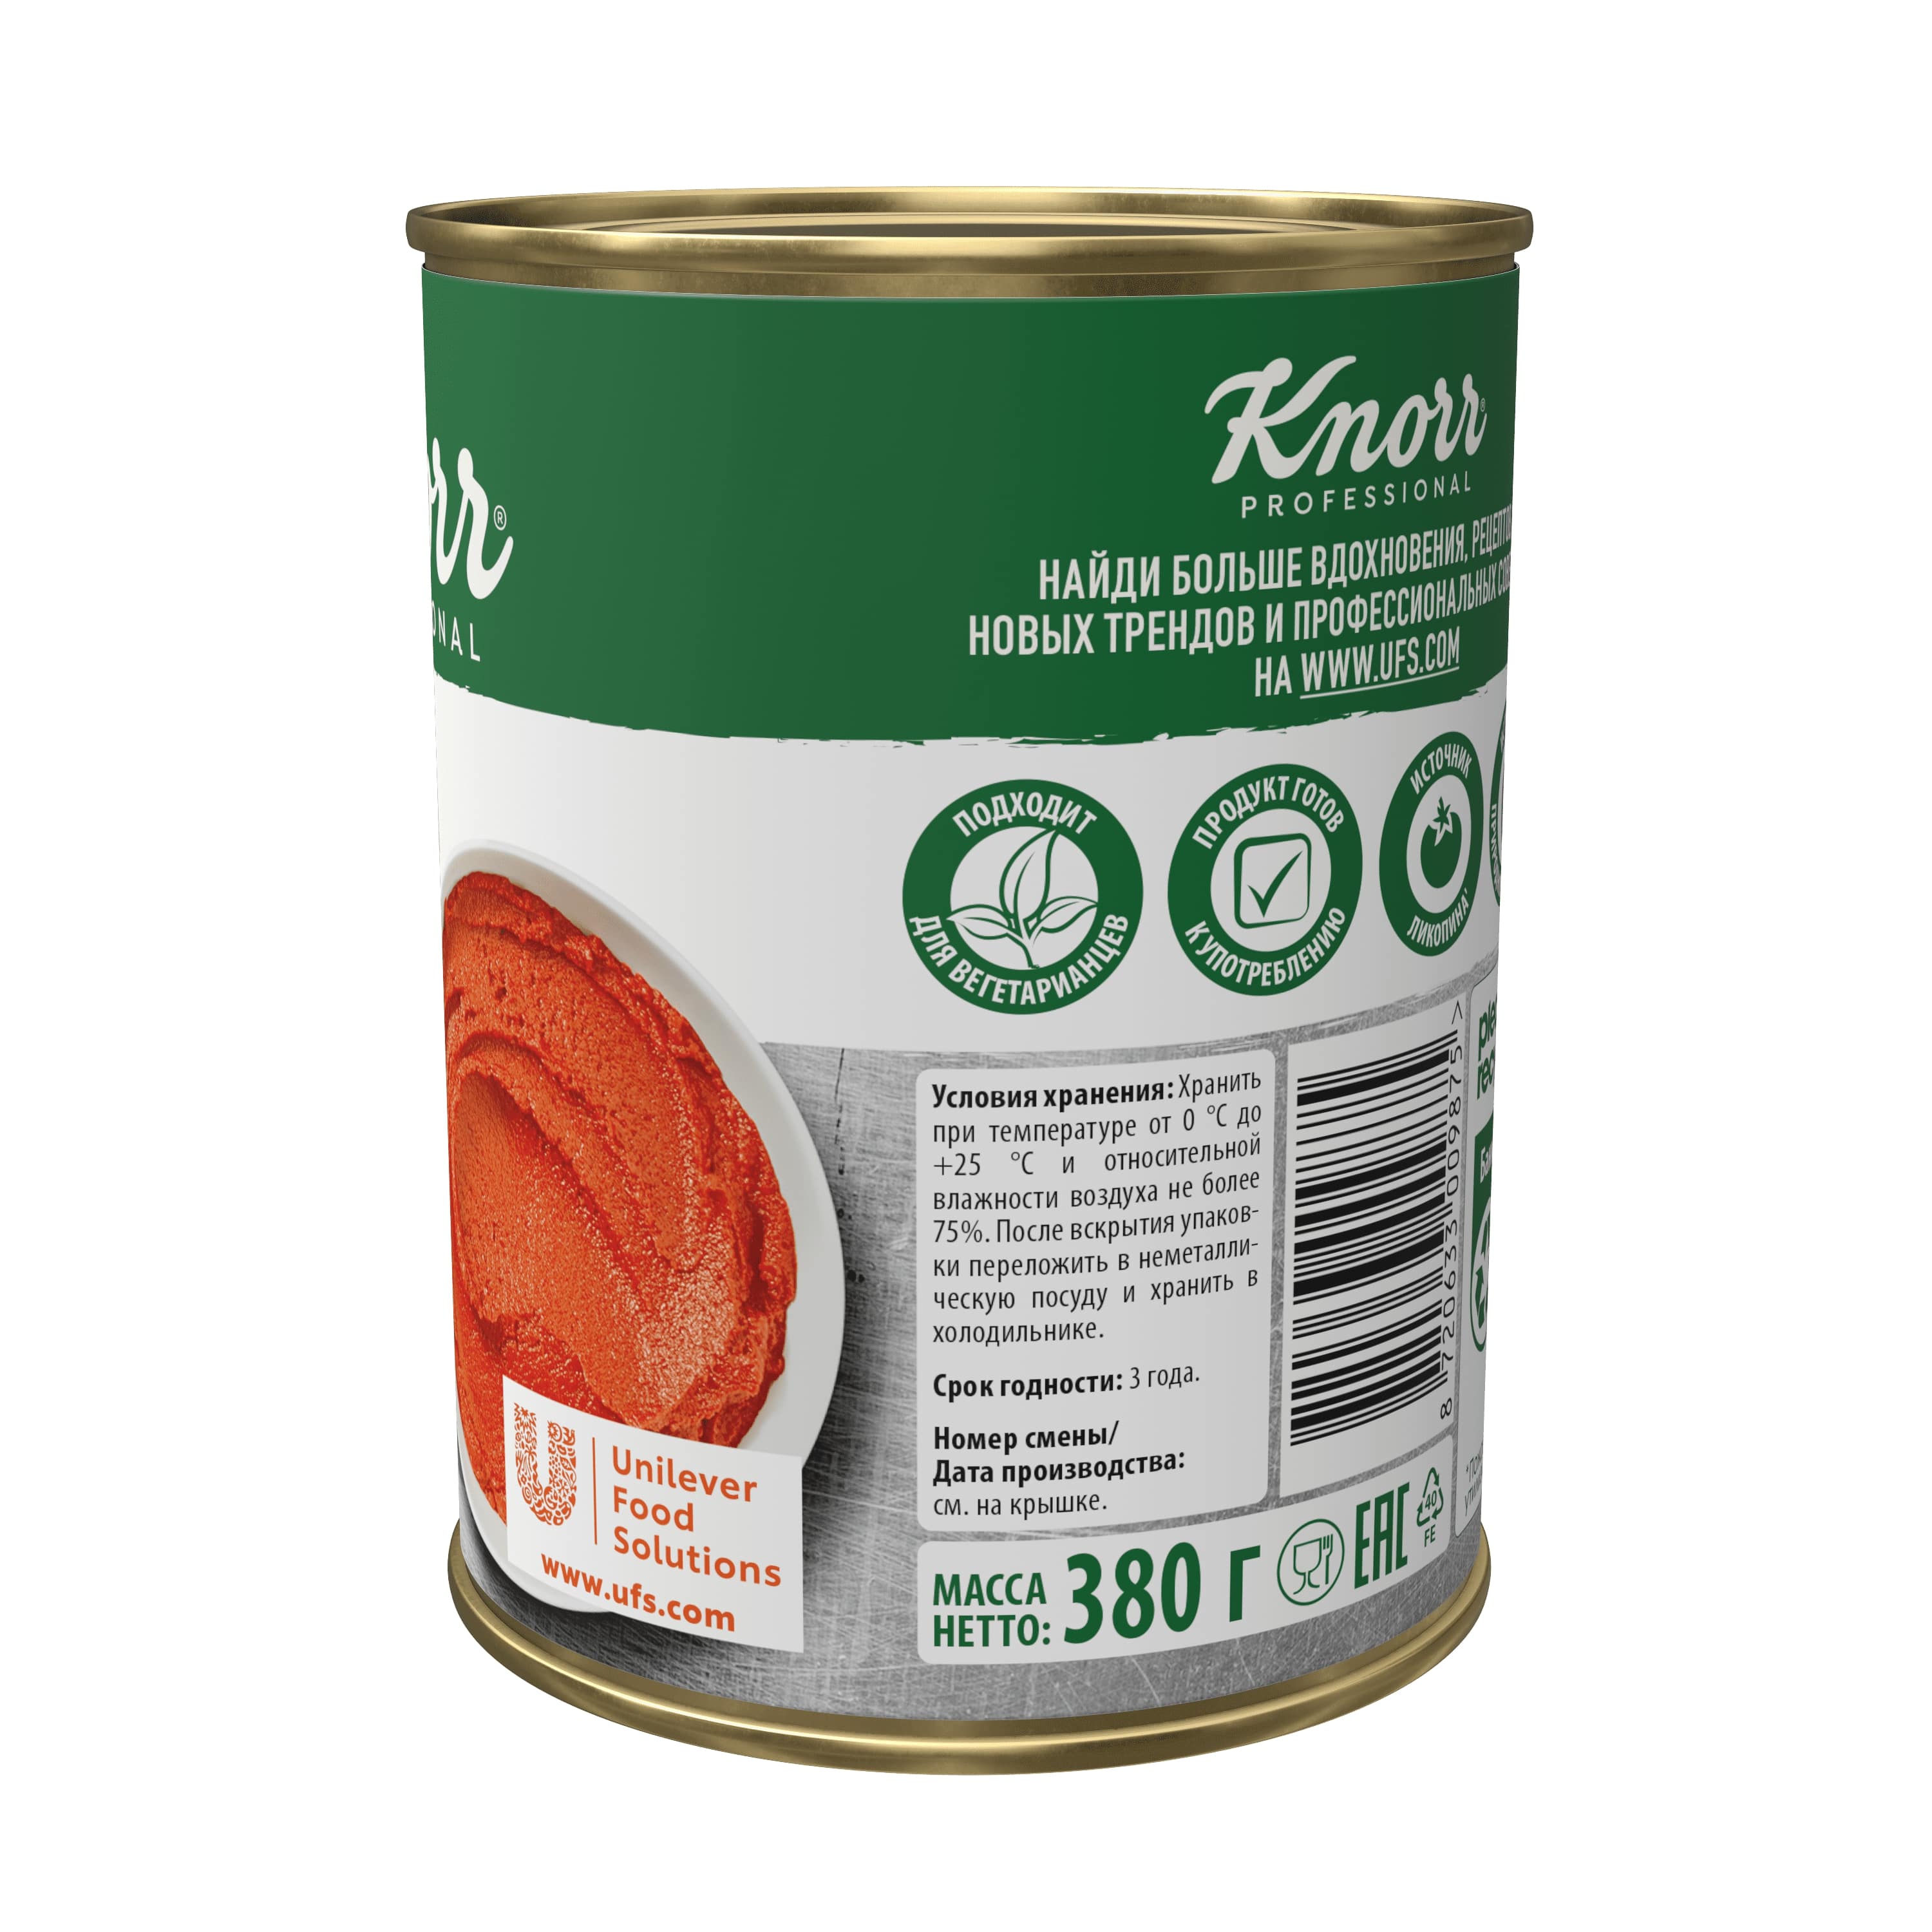 KNORR PROFESSIONAL Томатная паста (380 г) - Натуральная густая томатная паста с насыщенным вкусом и ярким цветом.